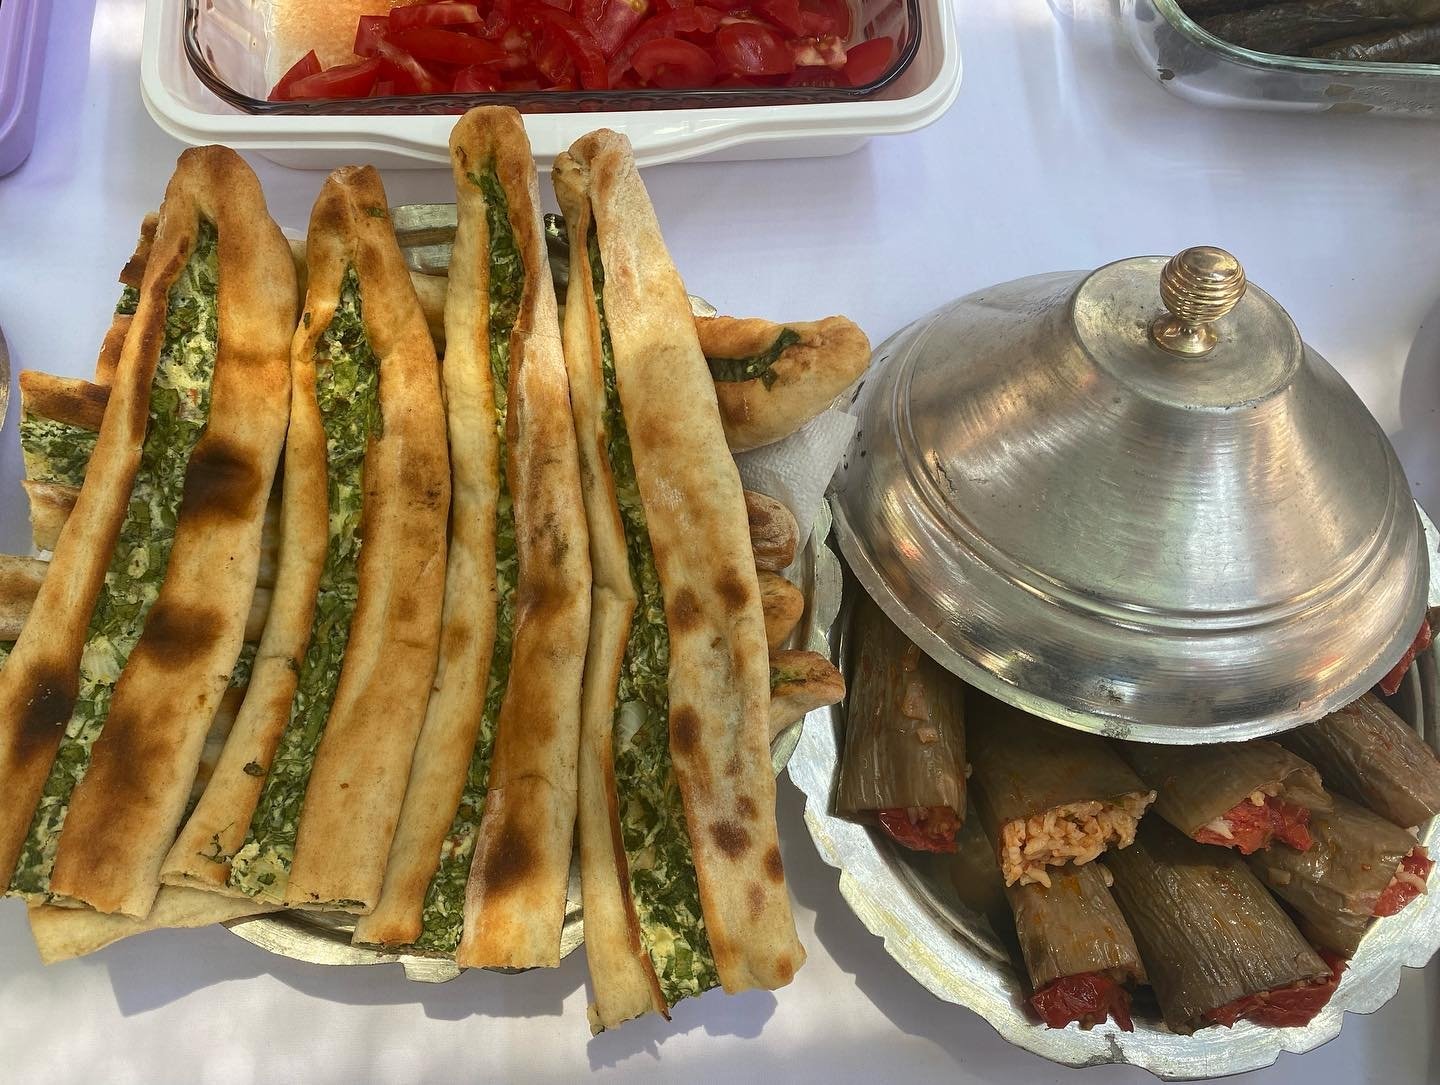 Turkish Cuisine Week festival kicks off in India Daily Sabah